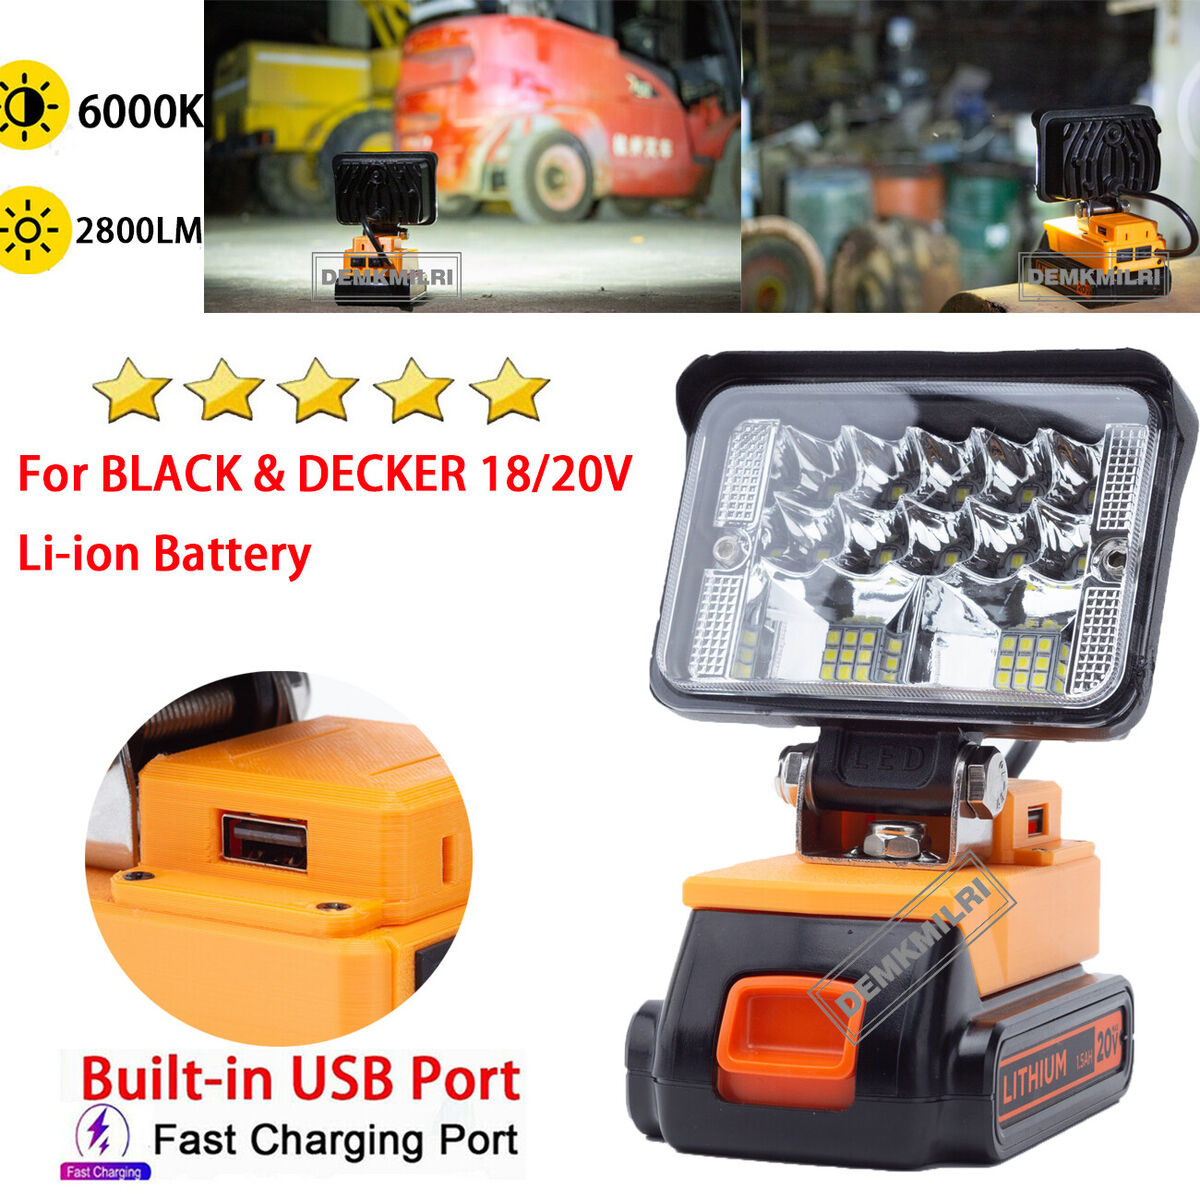 LED Work Light For Black & Decker 18/20V Li-Ion Battery(2800LM